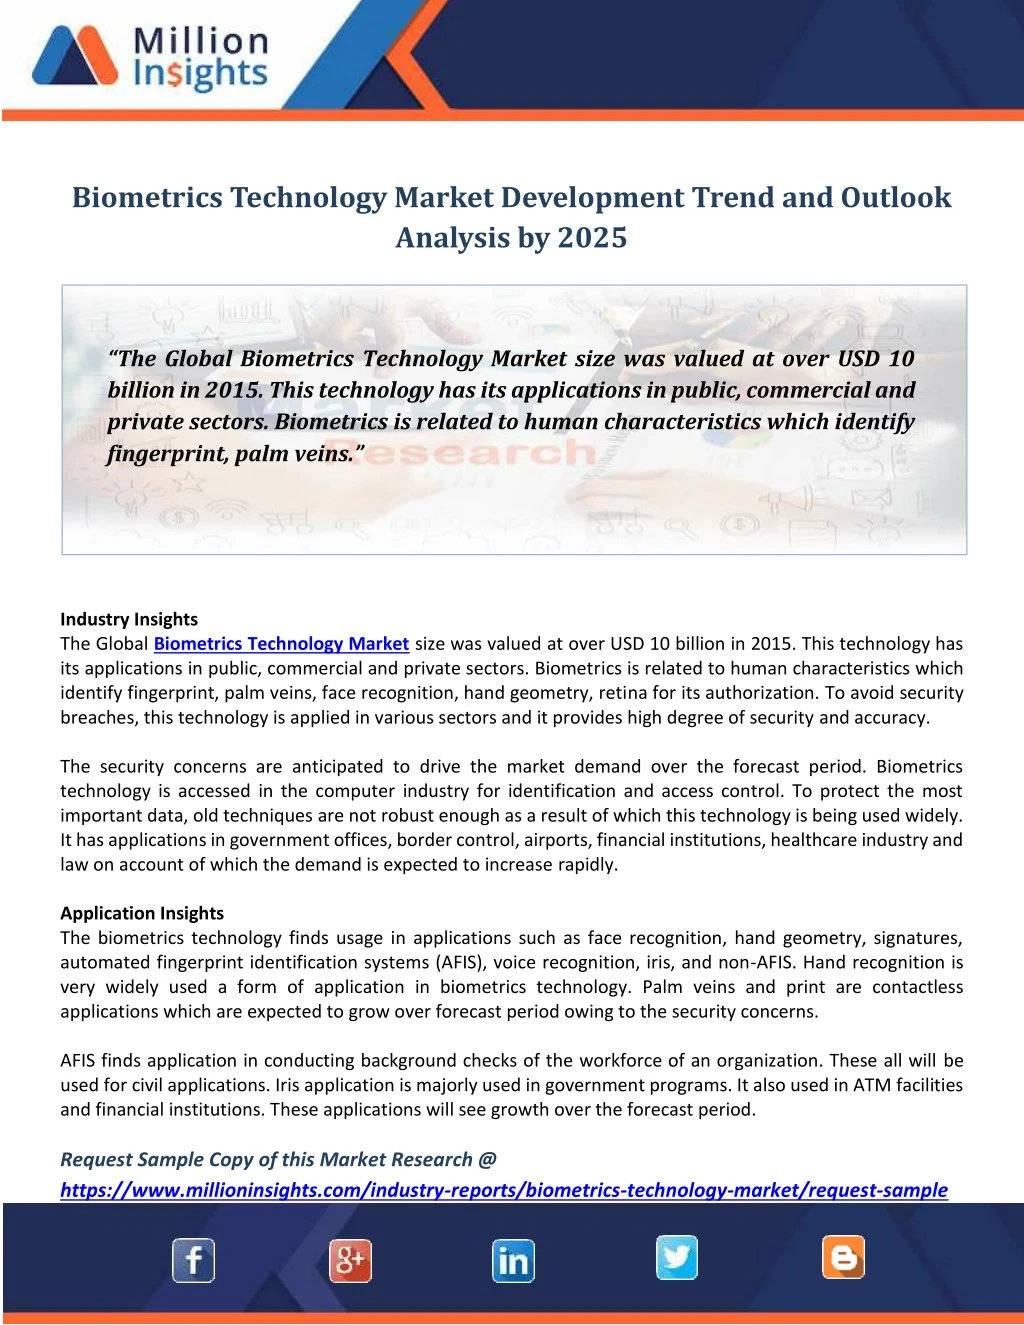 biometrics technology market development trend